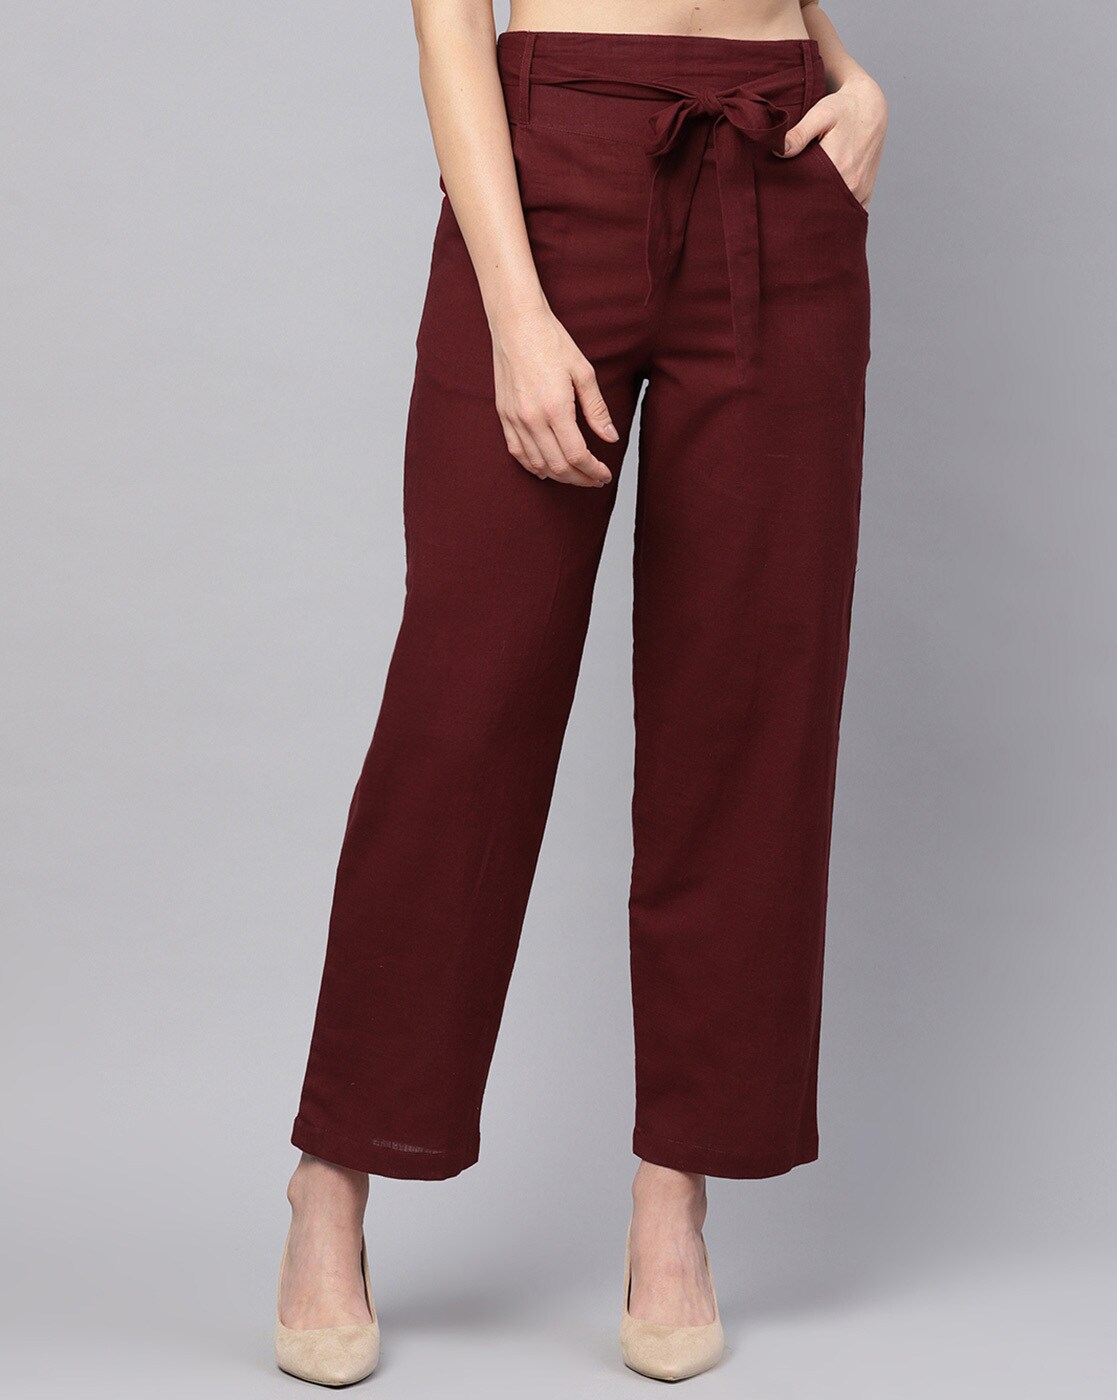 FASHION CLOUD Women Regular fit Cotton Pants (Maroon, Small) (Small) :  Amazon.in: Fashion